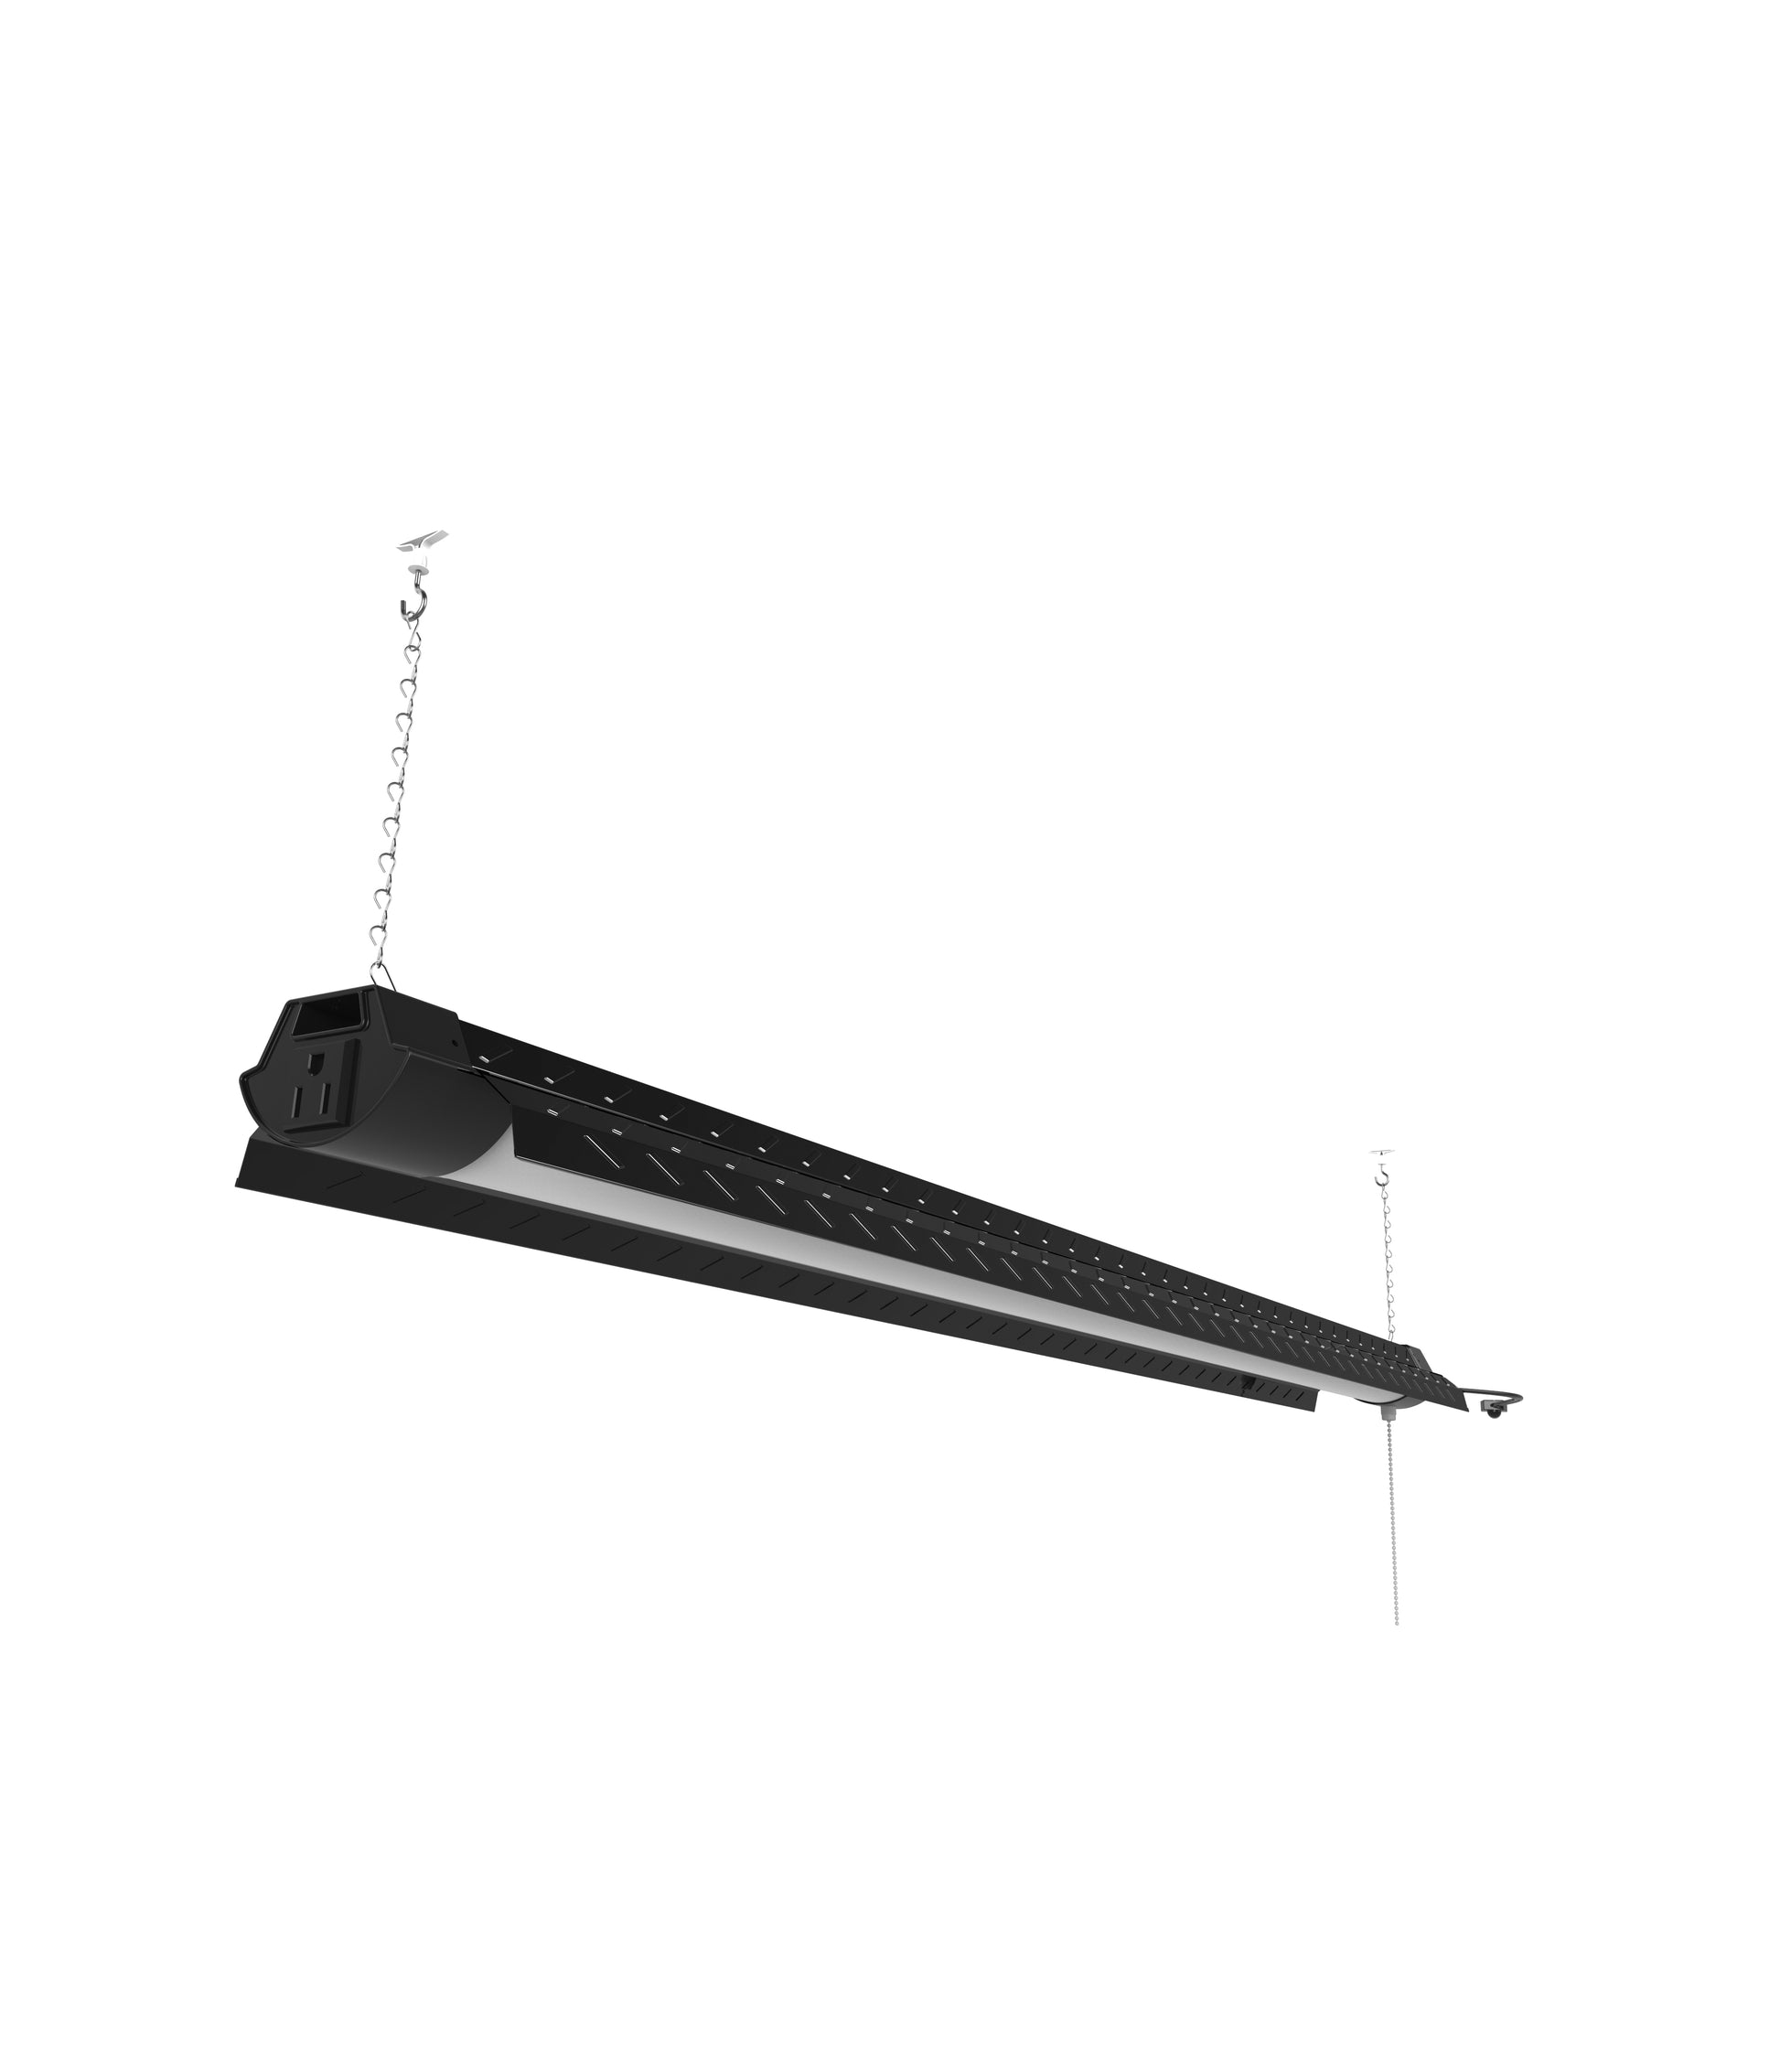 LED Folding Garage Bulb - 6000 Lumens - Pinegreen Lighting